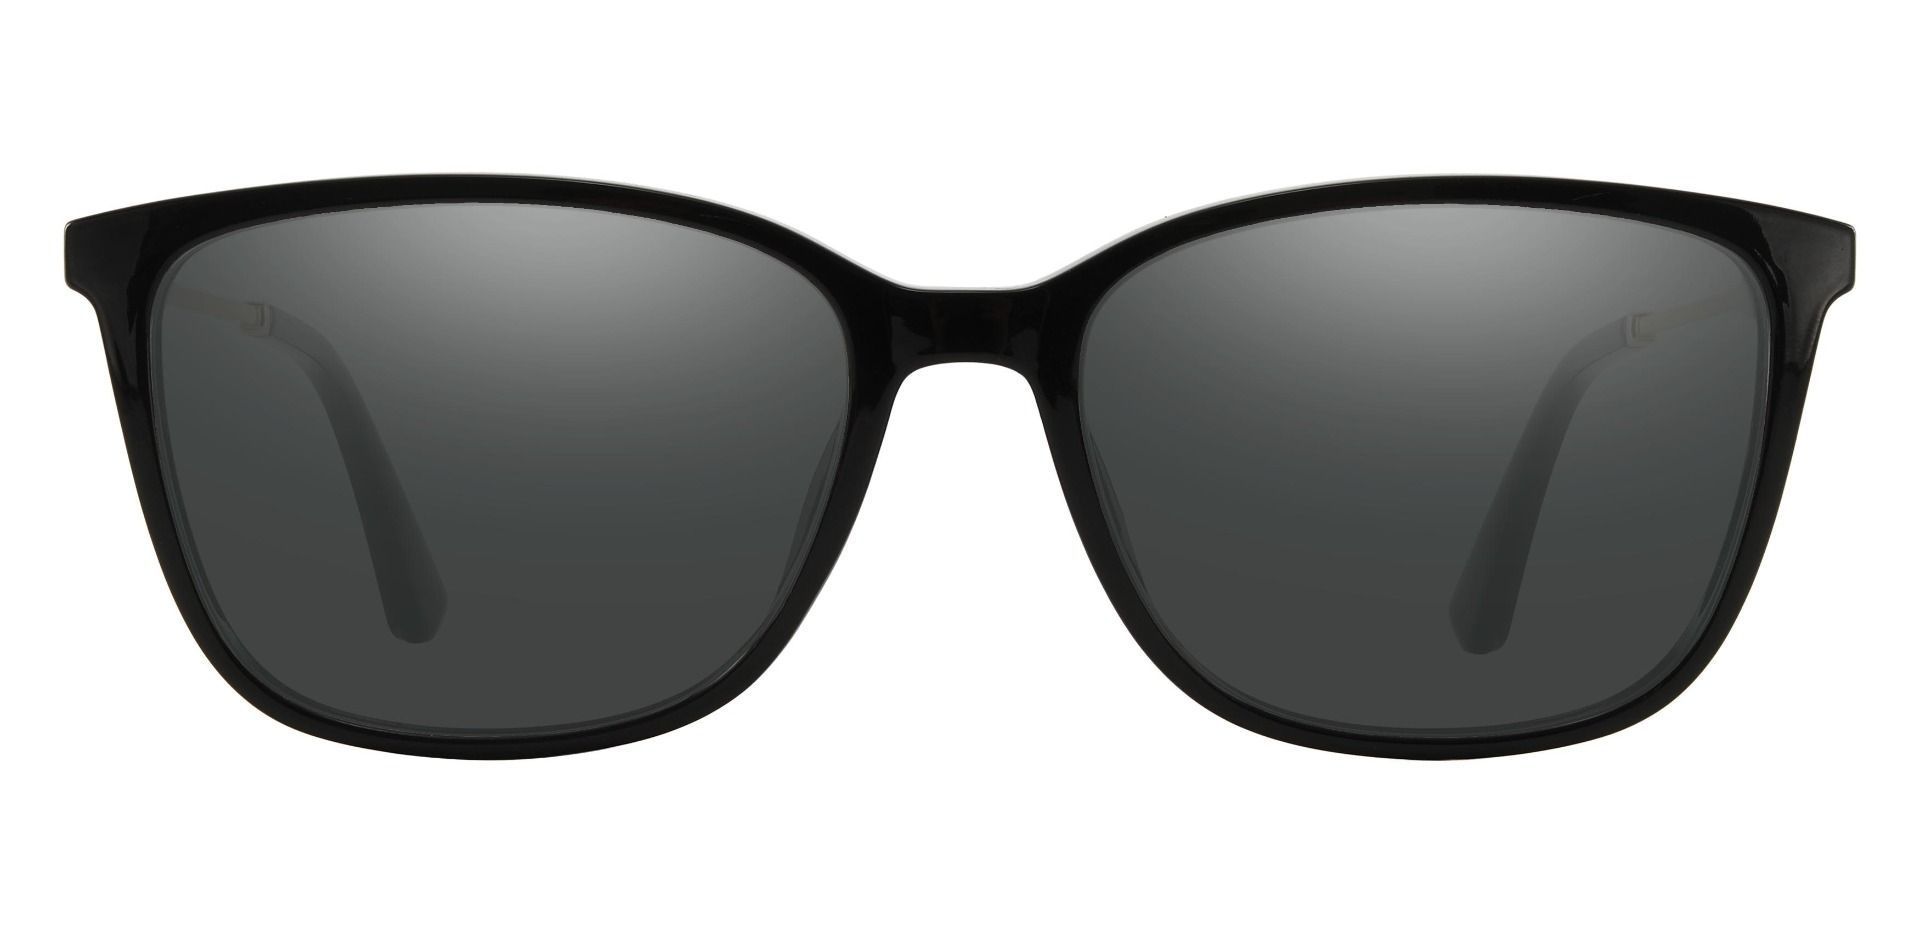 Miami Rectangle Prescription Sunglasses - Black Frame With Gray Lenses